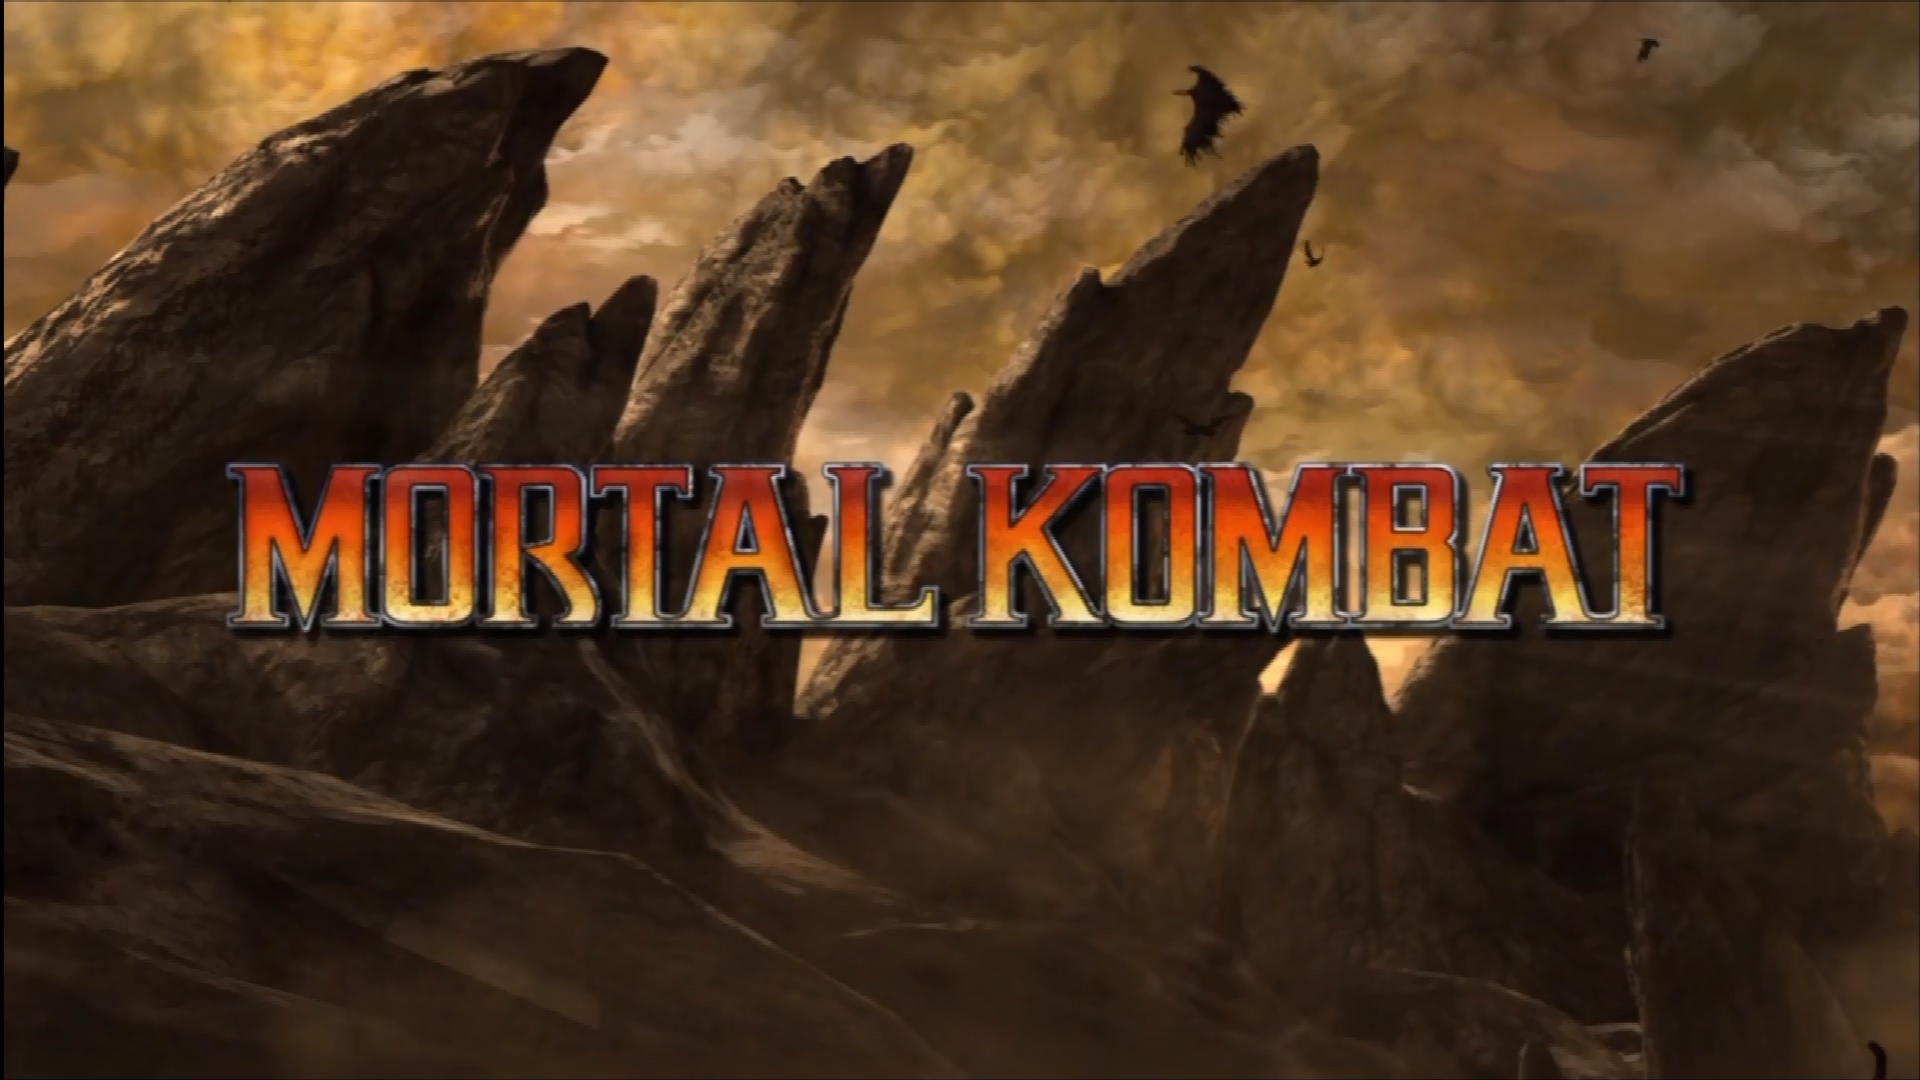 MORTAL KOMBAT Full Movie Complete Series All Cutscenes Full Story (2021) HD  